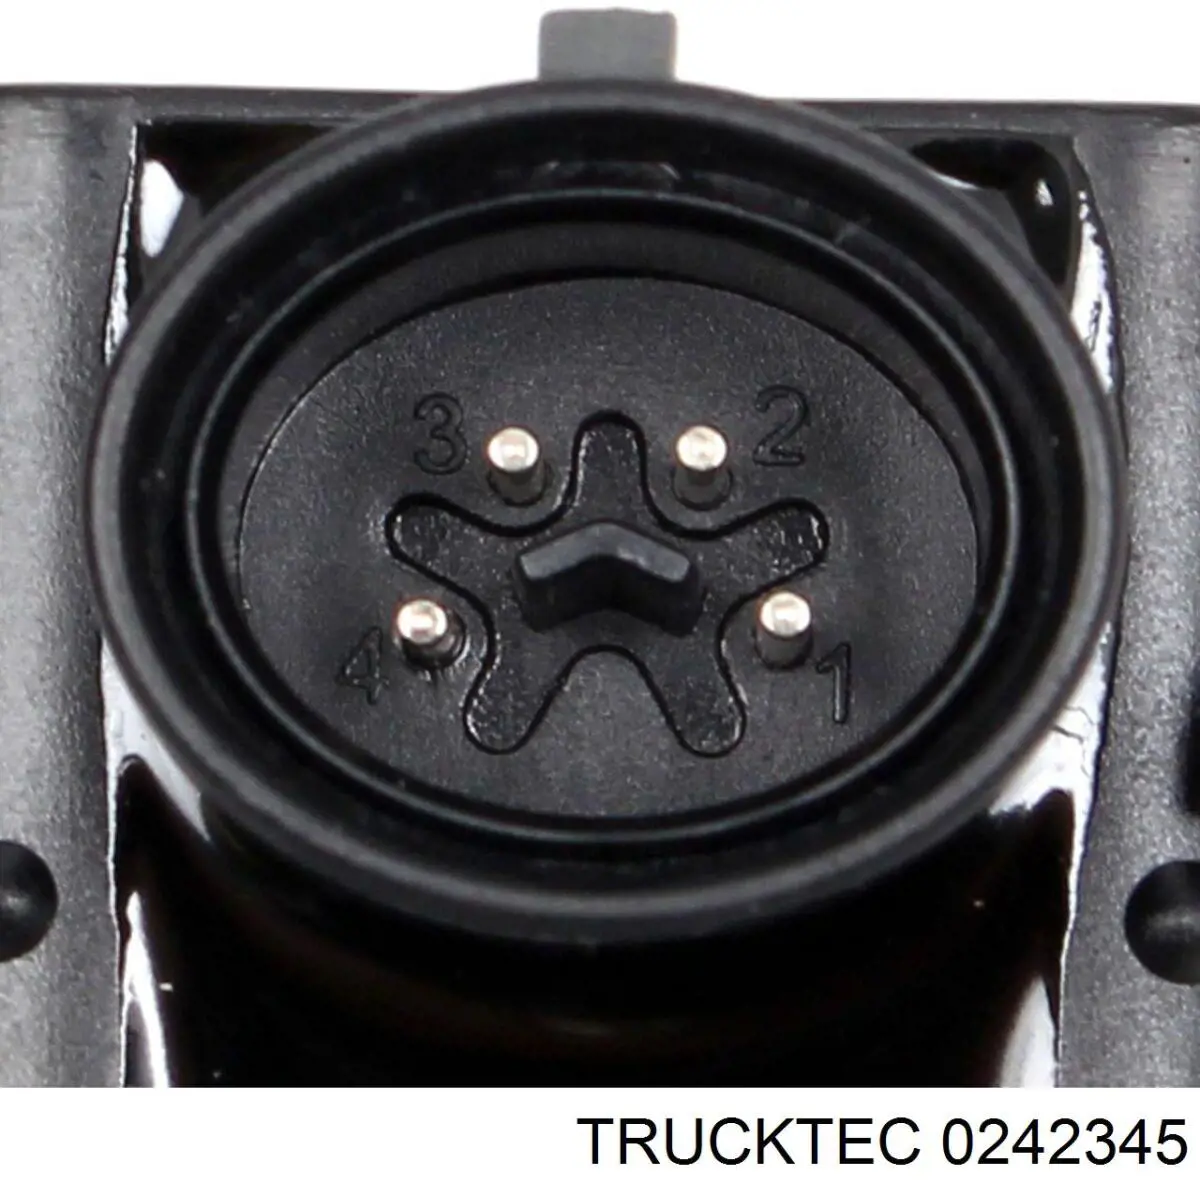 02.42.345 Trucktec sensor alarma de estacionamiento (packtronic Frontal)